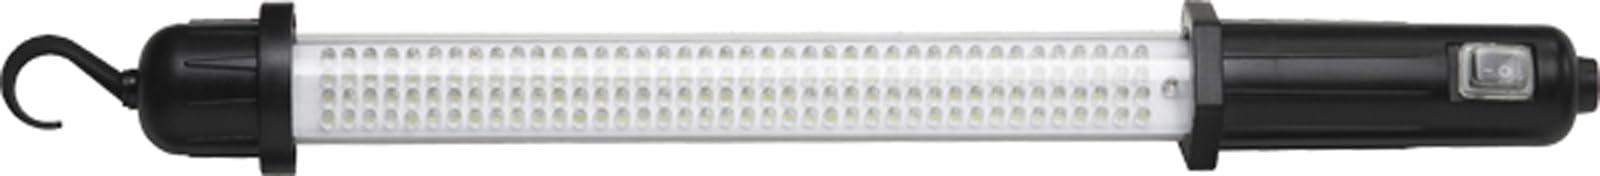 Bachmann 394.190 LED Akku Handleuchte, 160 LEDs mit Schalter